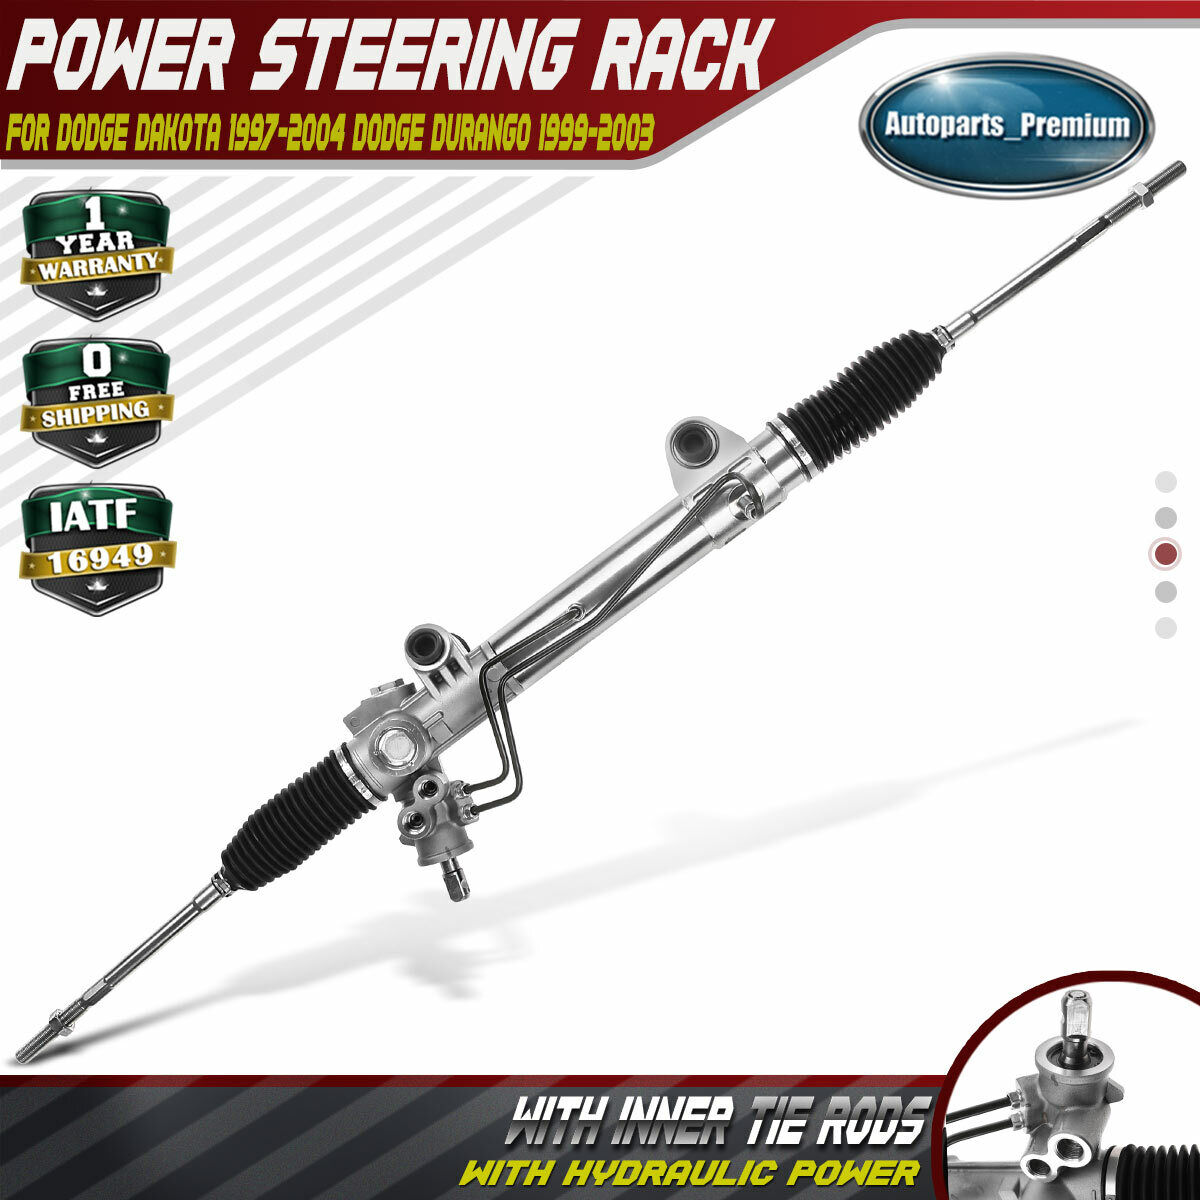 Power Steering Rack and Pinion Assembly for Dodge Dakota 97-04 Durango 99-03 RWD